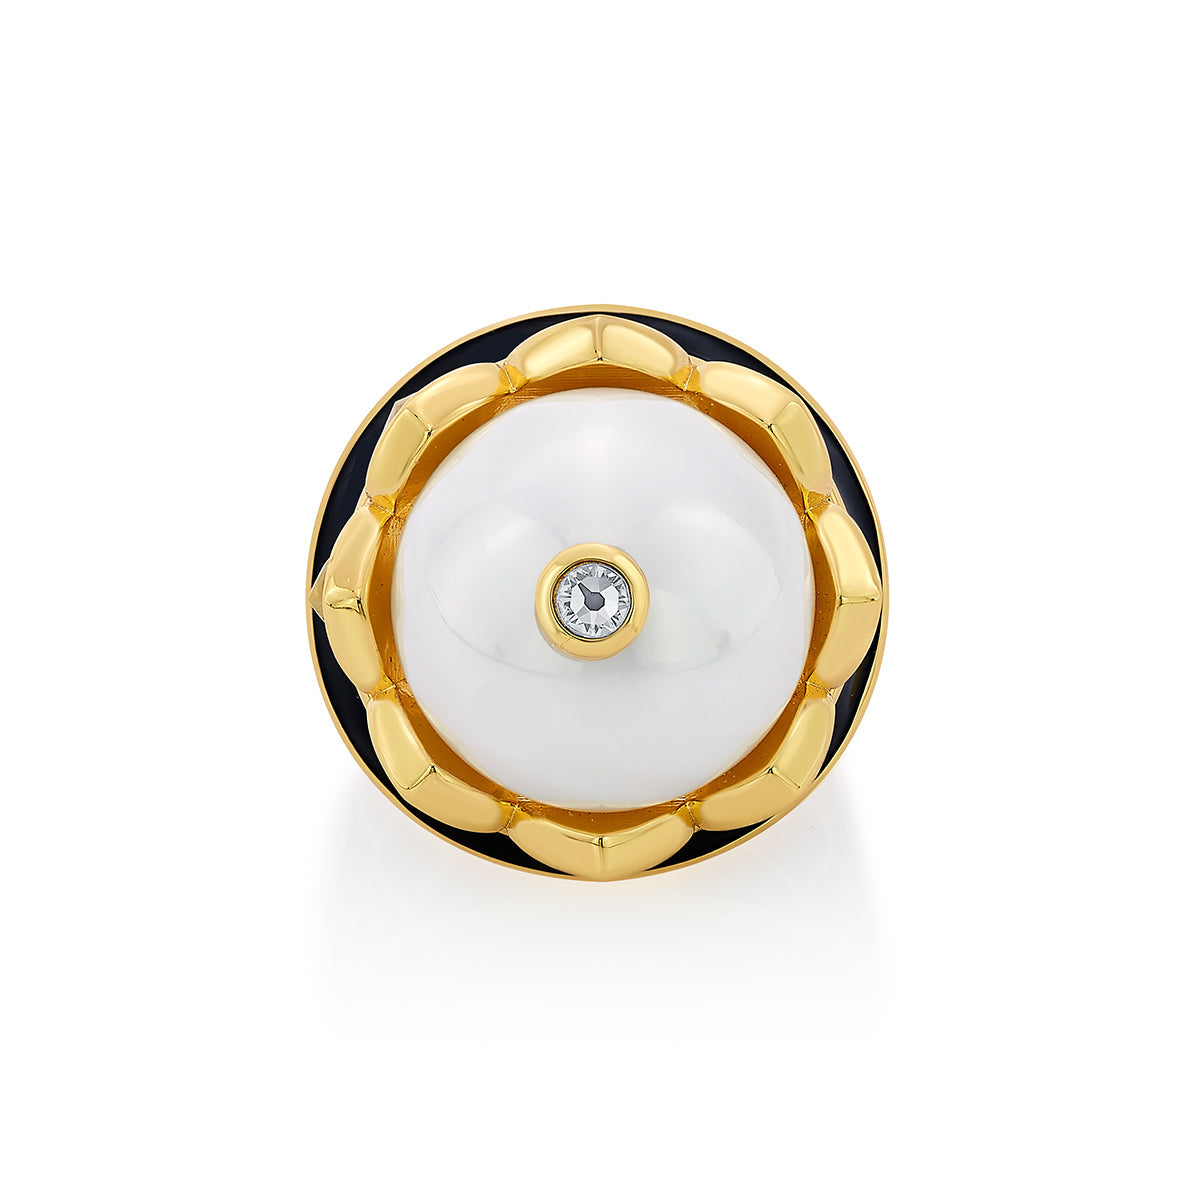 Amina Pearl Dome Ring - Isharya | Modern Indian Jewelry